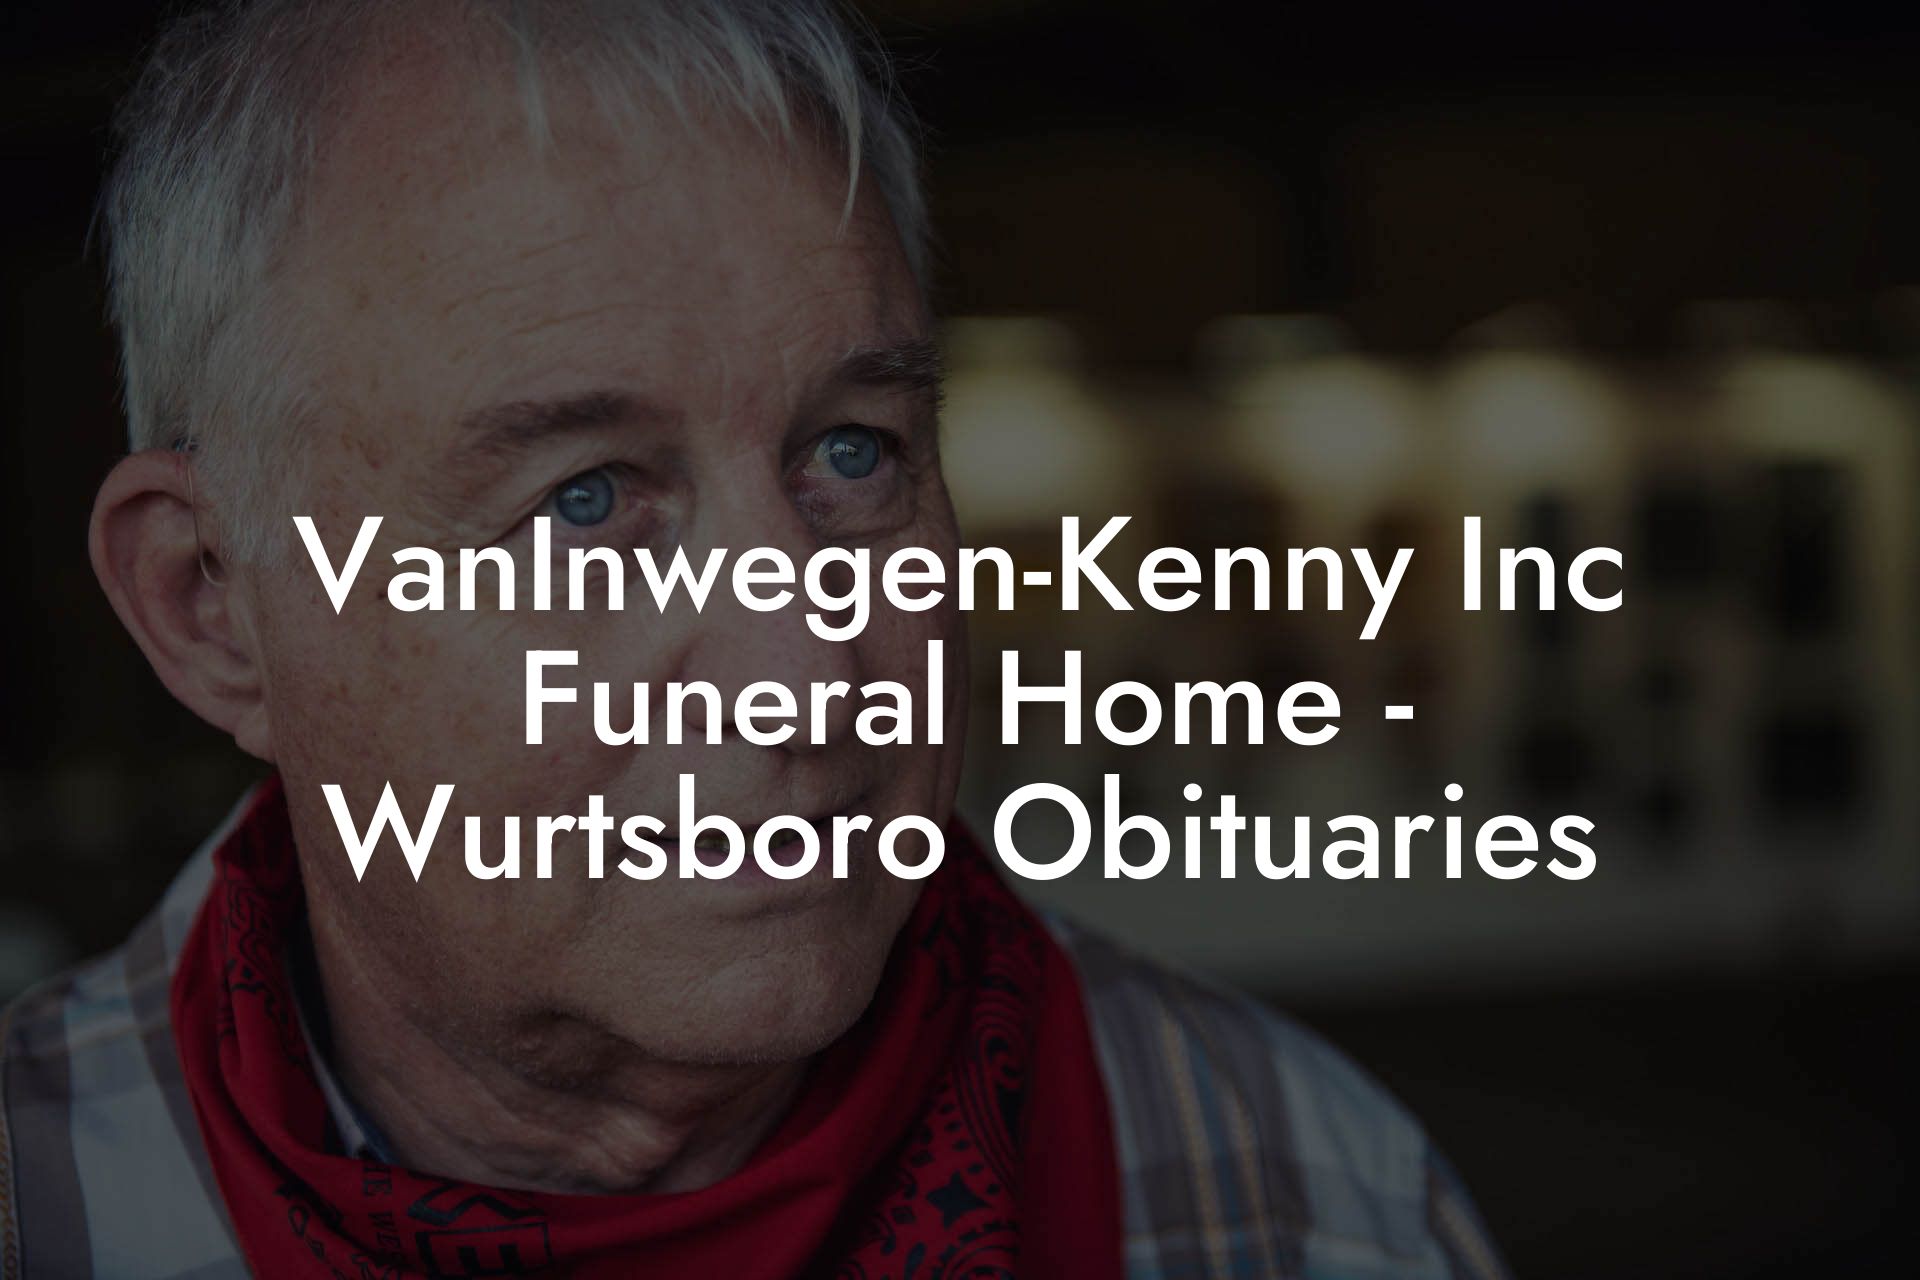 VanInwegen-Kenny Inc Funeral Home - Wurtsboro Obituaries